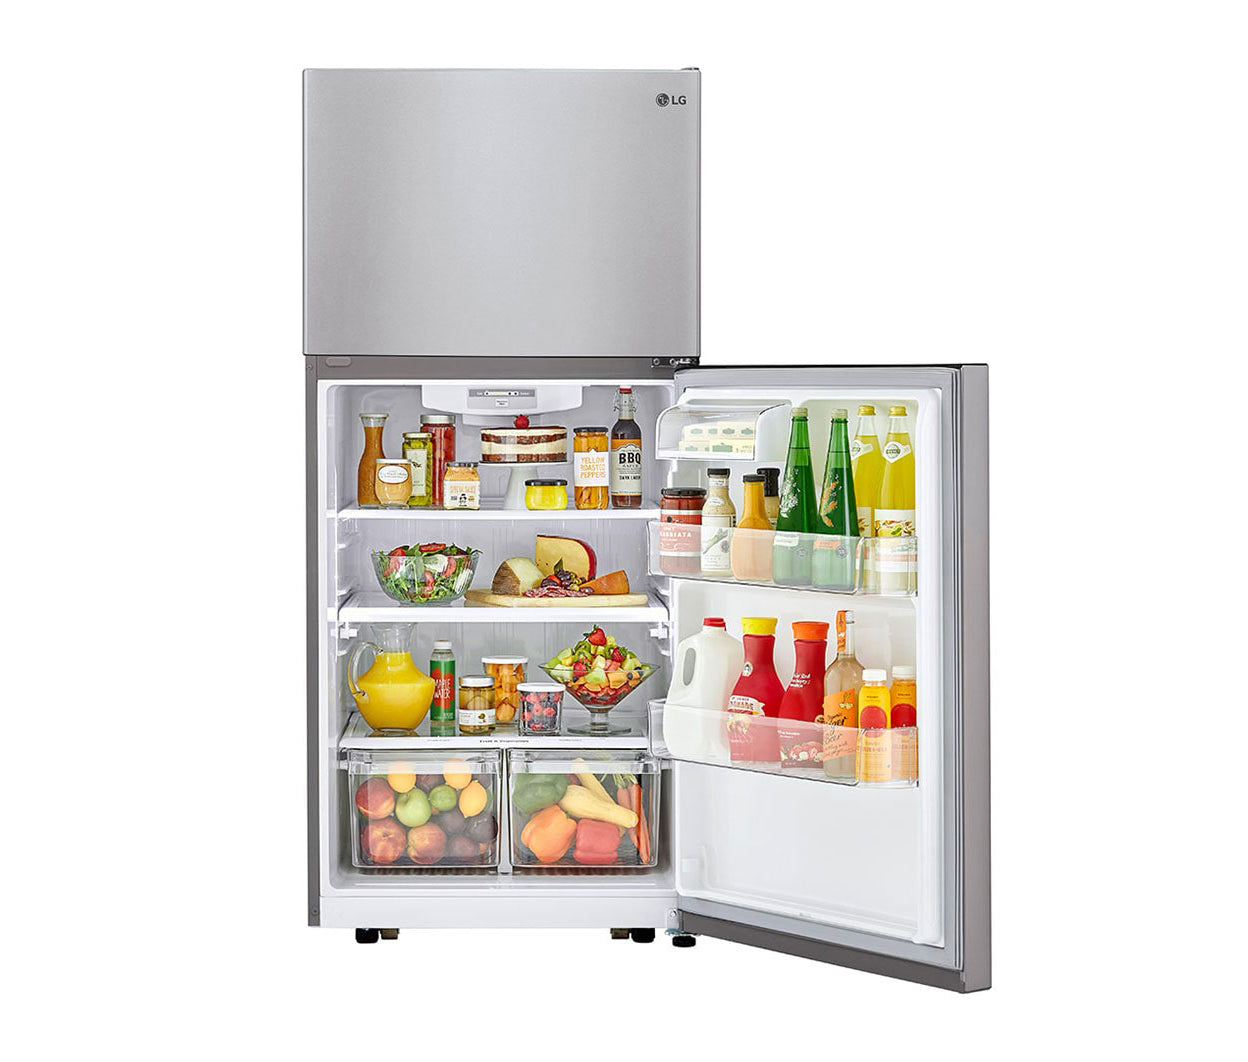 LG Electronics LTCS20020S Top-Freezer Refrigerator, 20.2 Cu. Ft with 1-Year Warranty